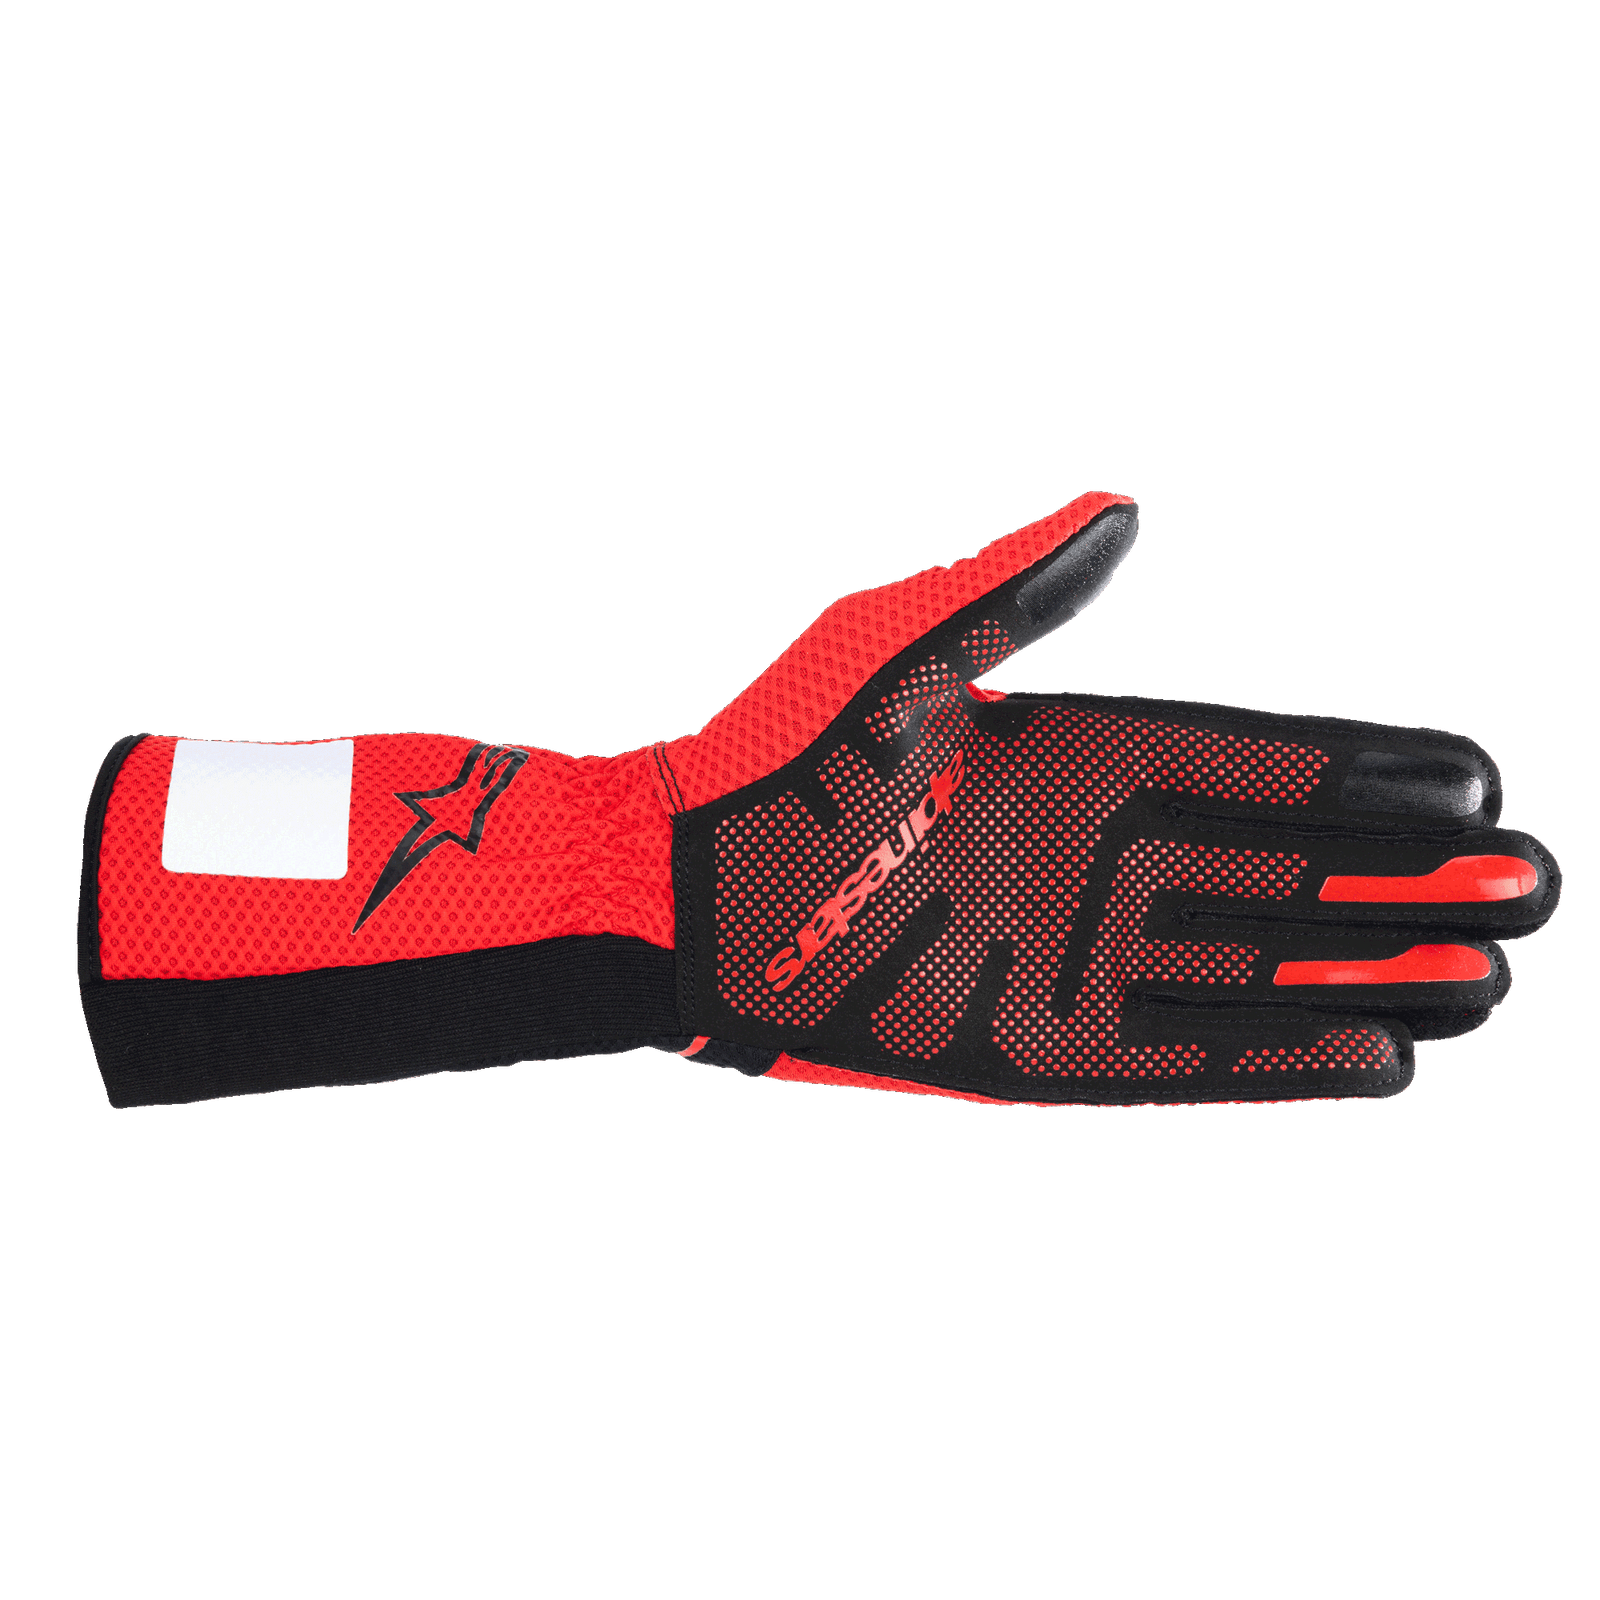 Tech-1 KX V4 Handschuhe